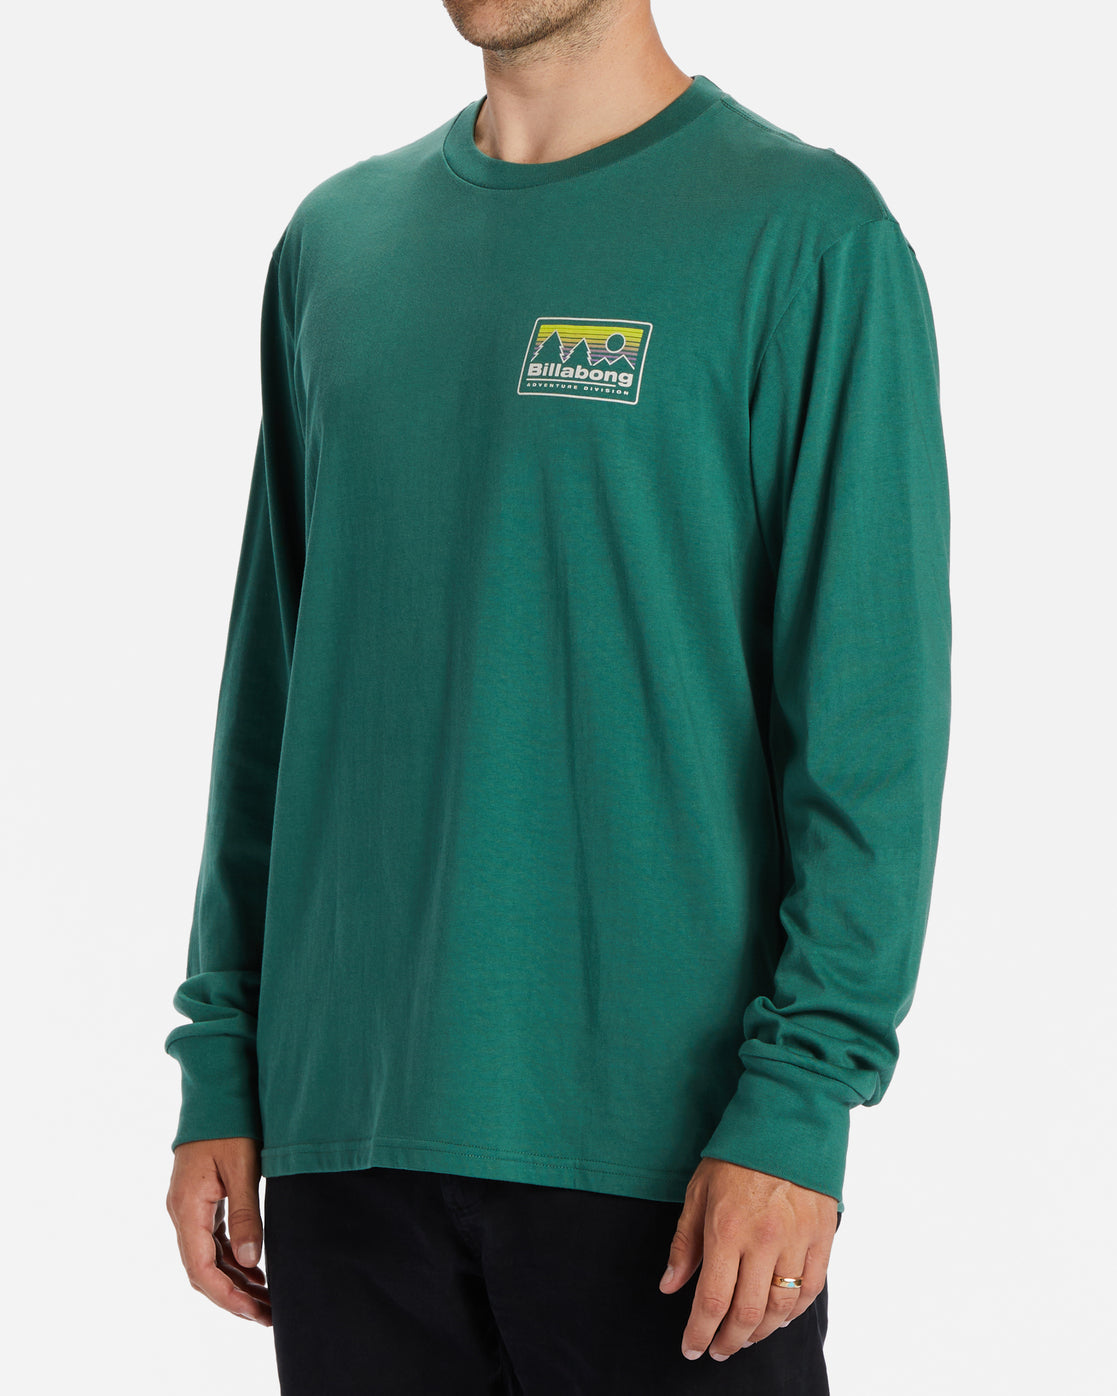 Range Long Sleeve T-Shirt - Jungle